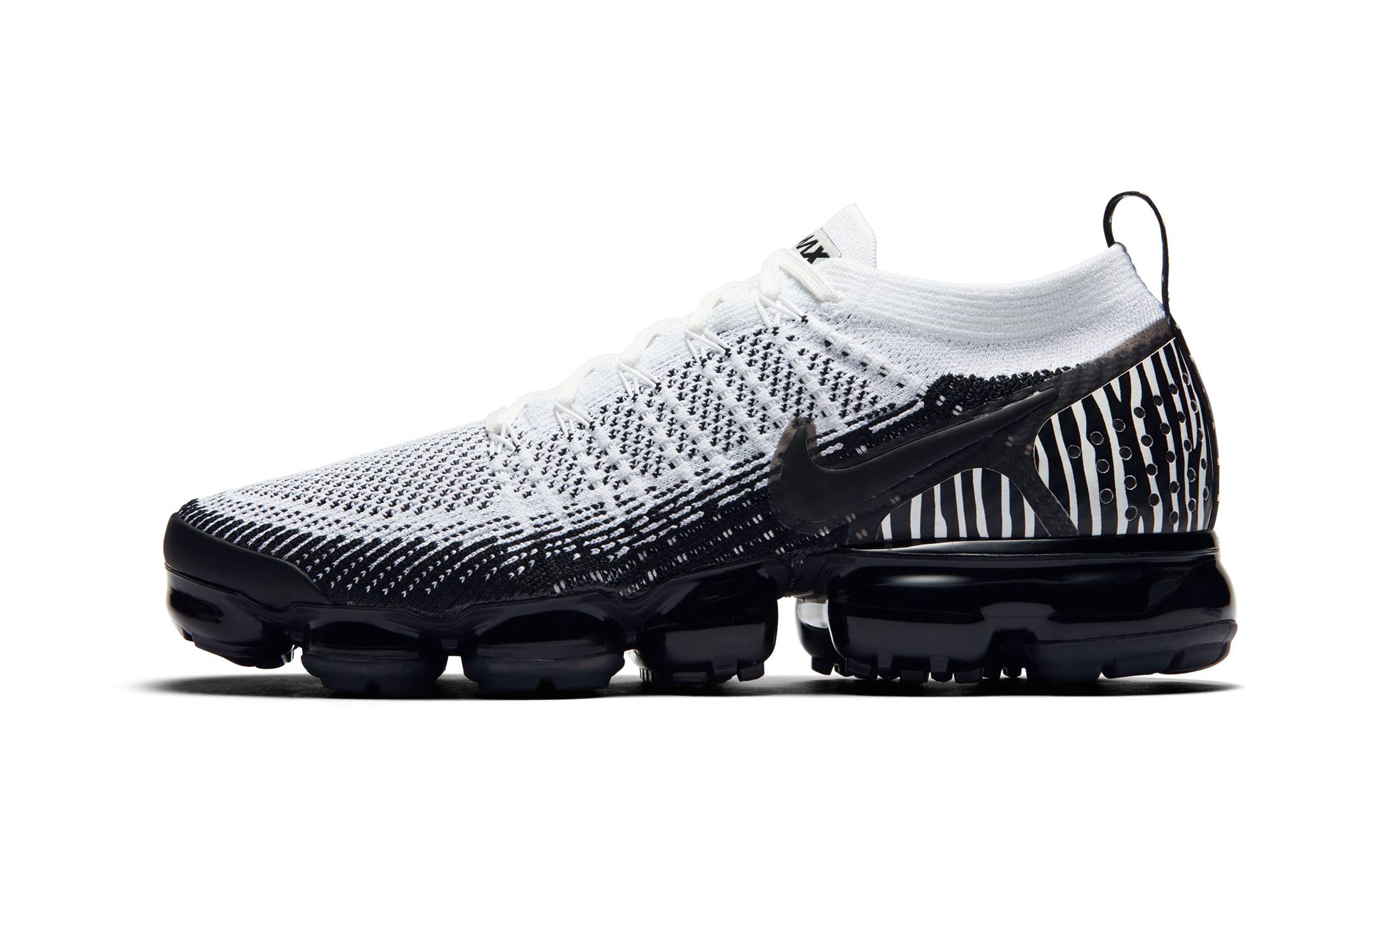 Nike Air VaporMax 2.0 Zebra black white release info sneakers